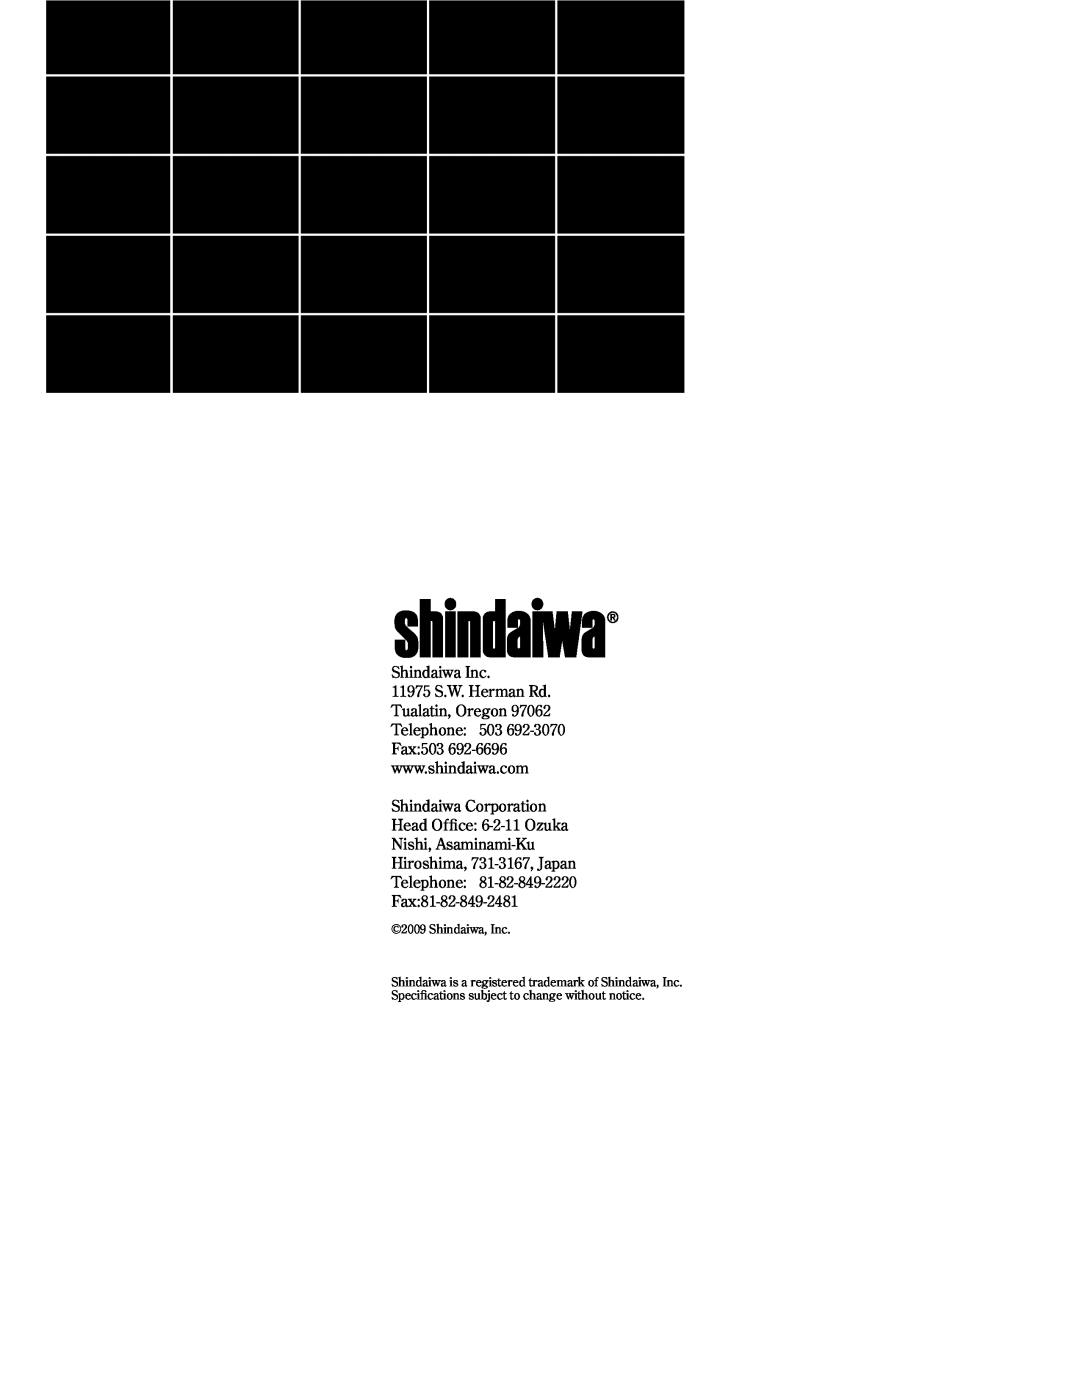 Shindaiwa T2510/EVC, 89300 manual Shindaiwa Inc, Shindaiwa Corporation Head Ofﬁce 6-2-11Ozuka, Telephone Fax, Shindaiwa, Inc 